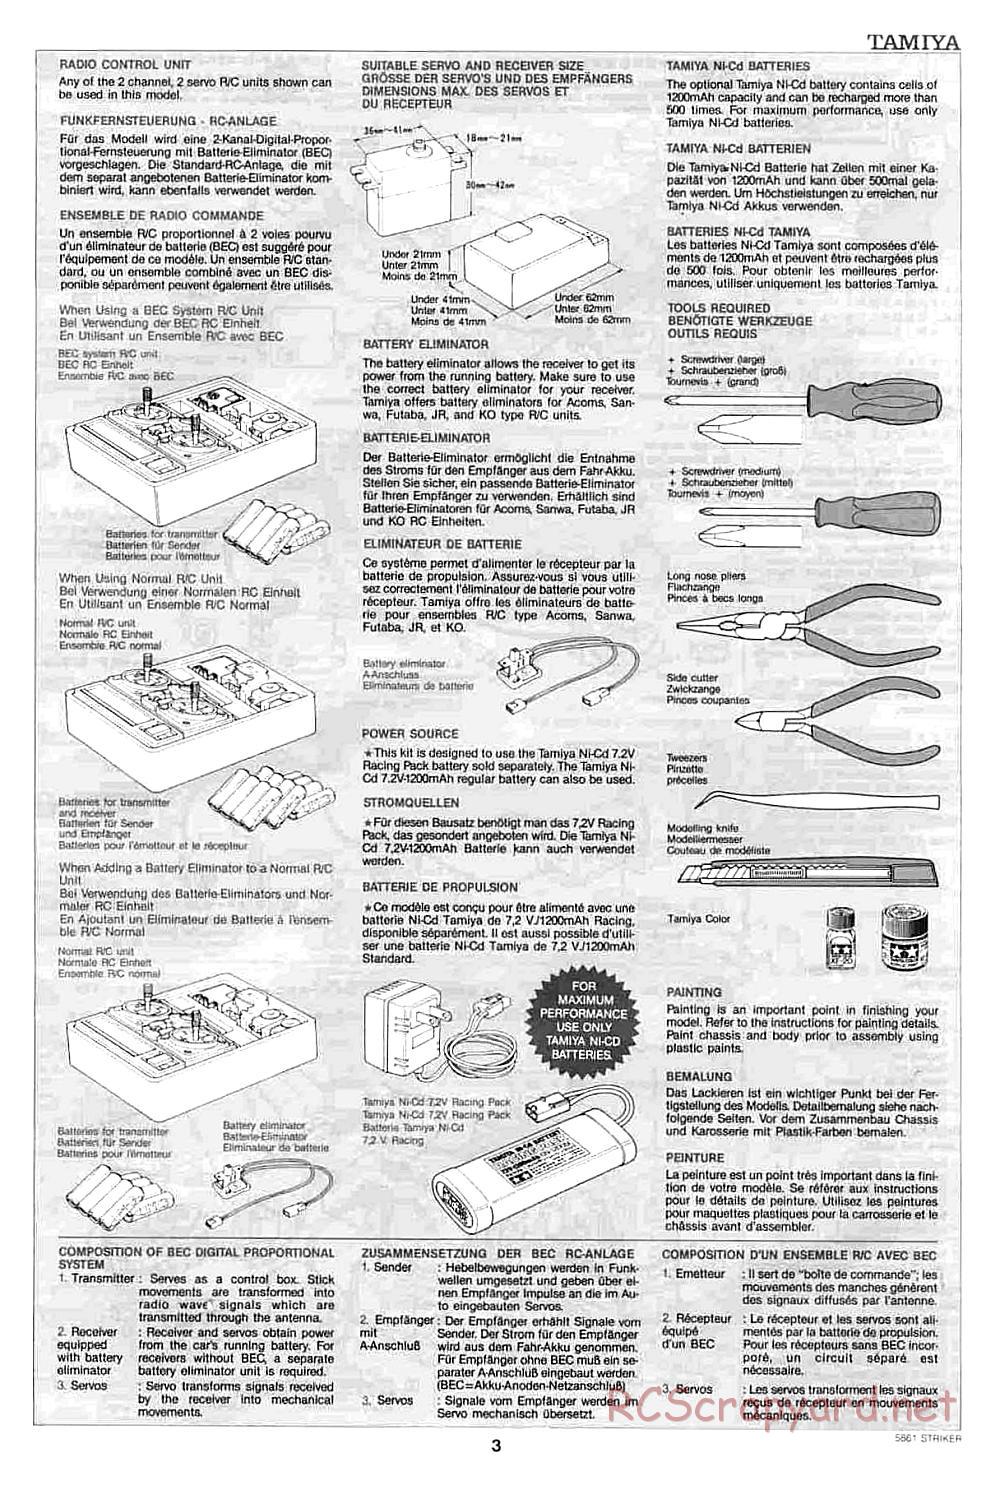 Tamiya - Striker - 58061 - Manual - Page 3